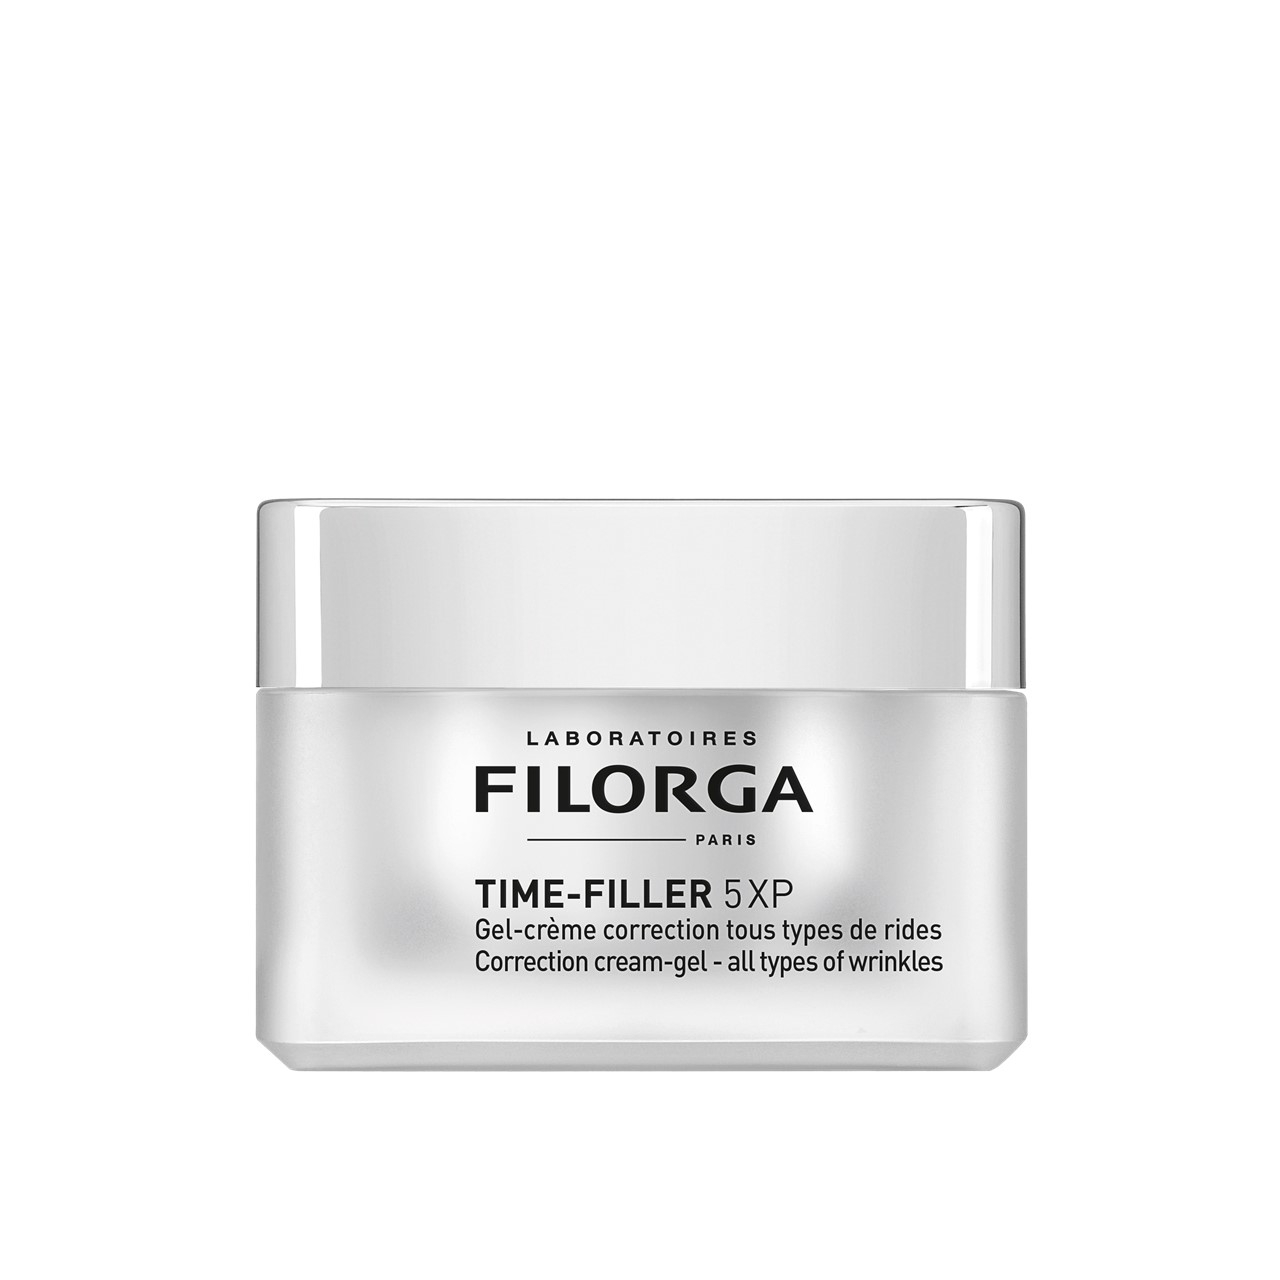 Filorga Time-Filler 5XP Correction Gel-Cream 50ml